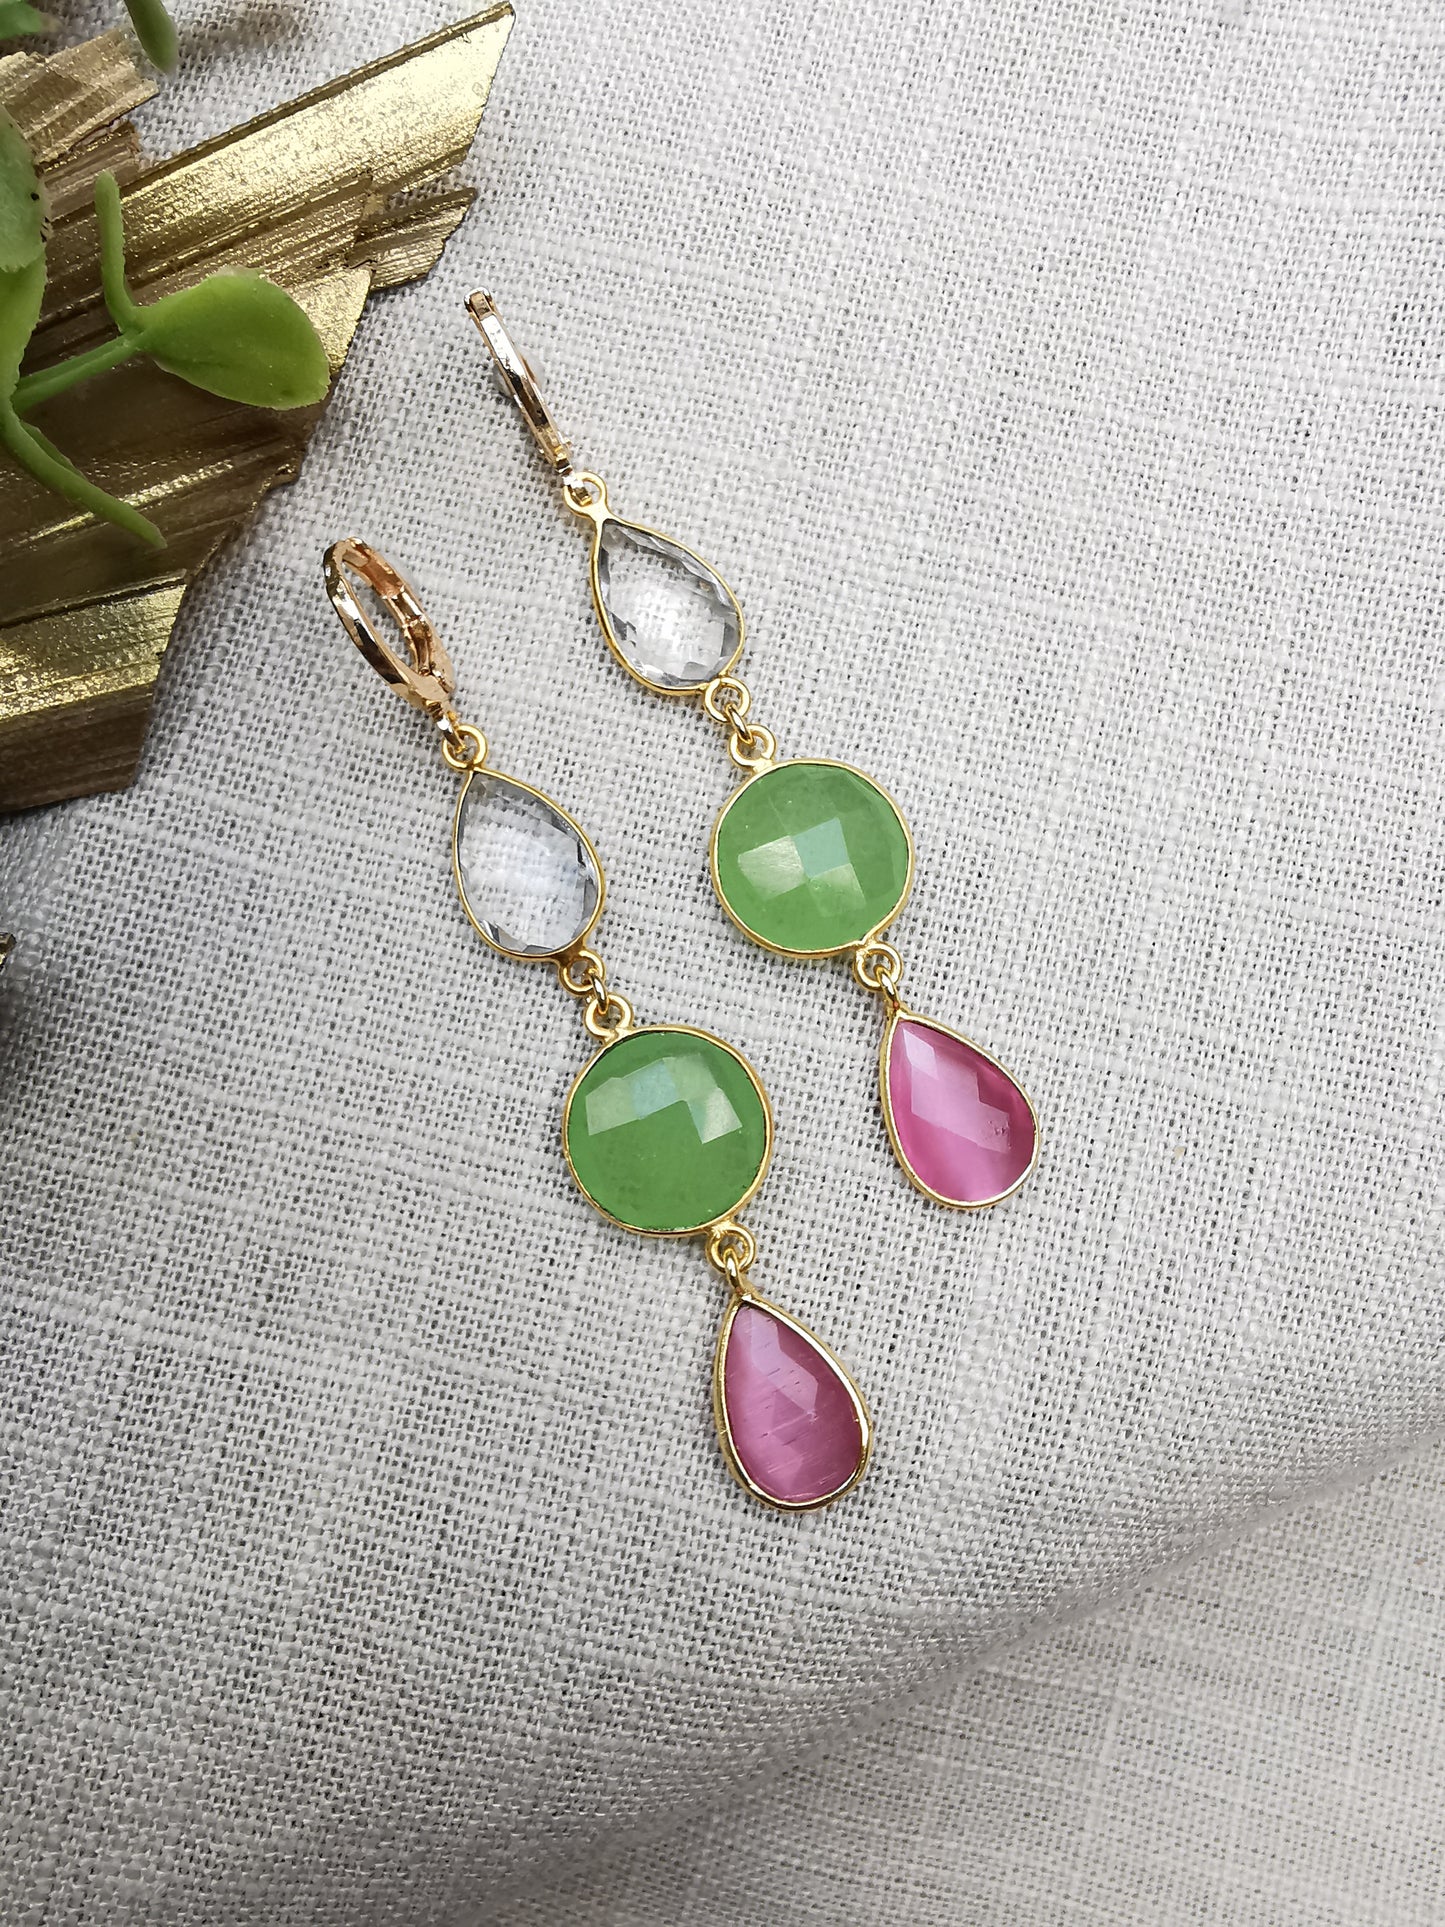 Multi-Gemstone Long Drop Earrings with Peruvian Quartz + Prehinte + Pink Blush Mona Lisa Stone Teardrop.